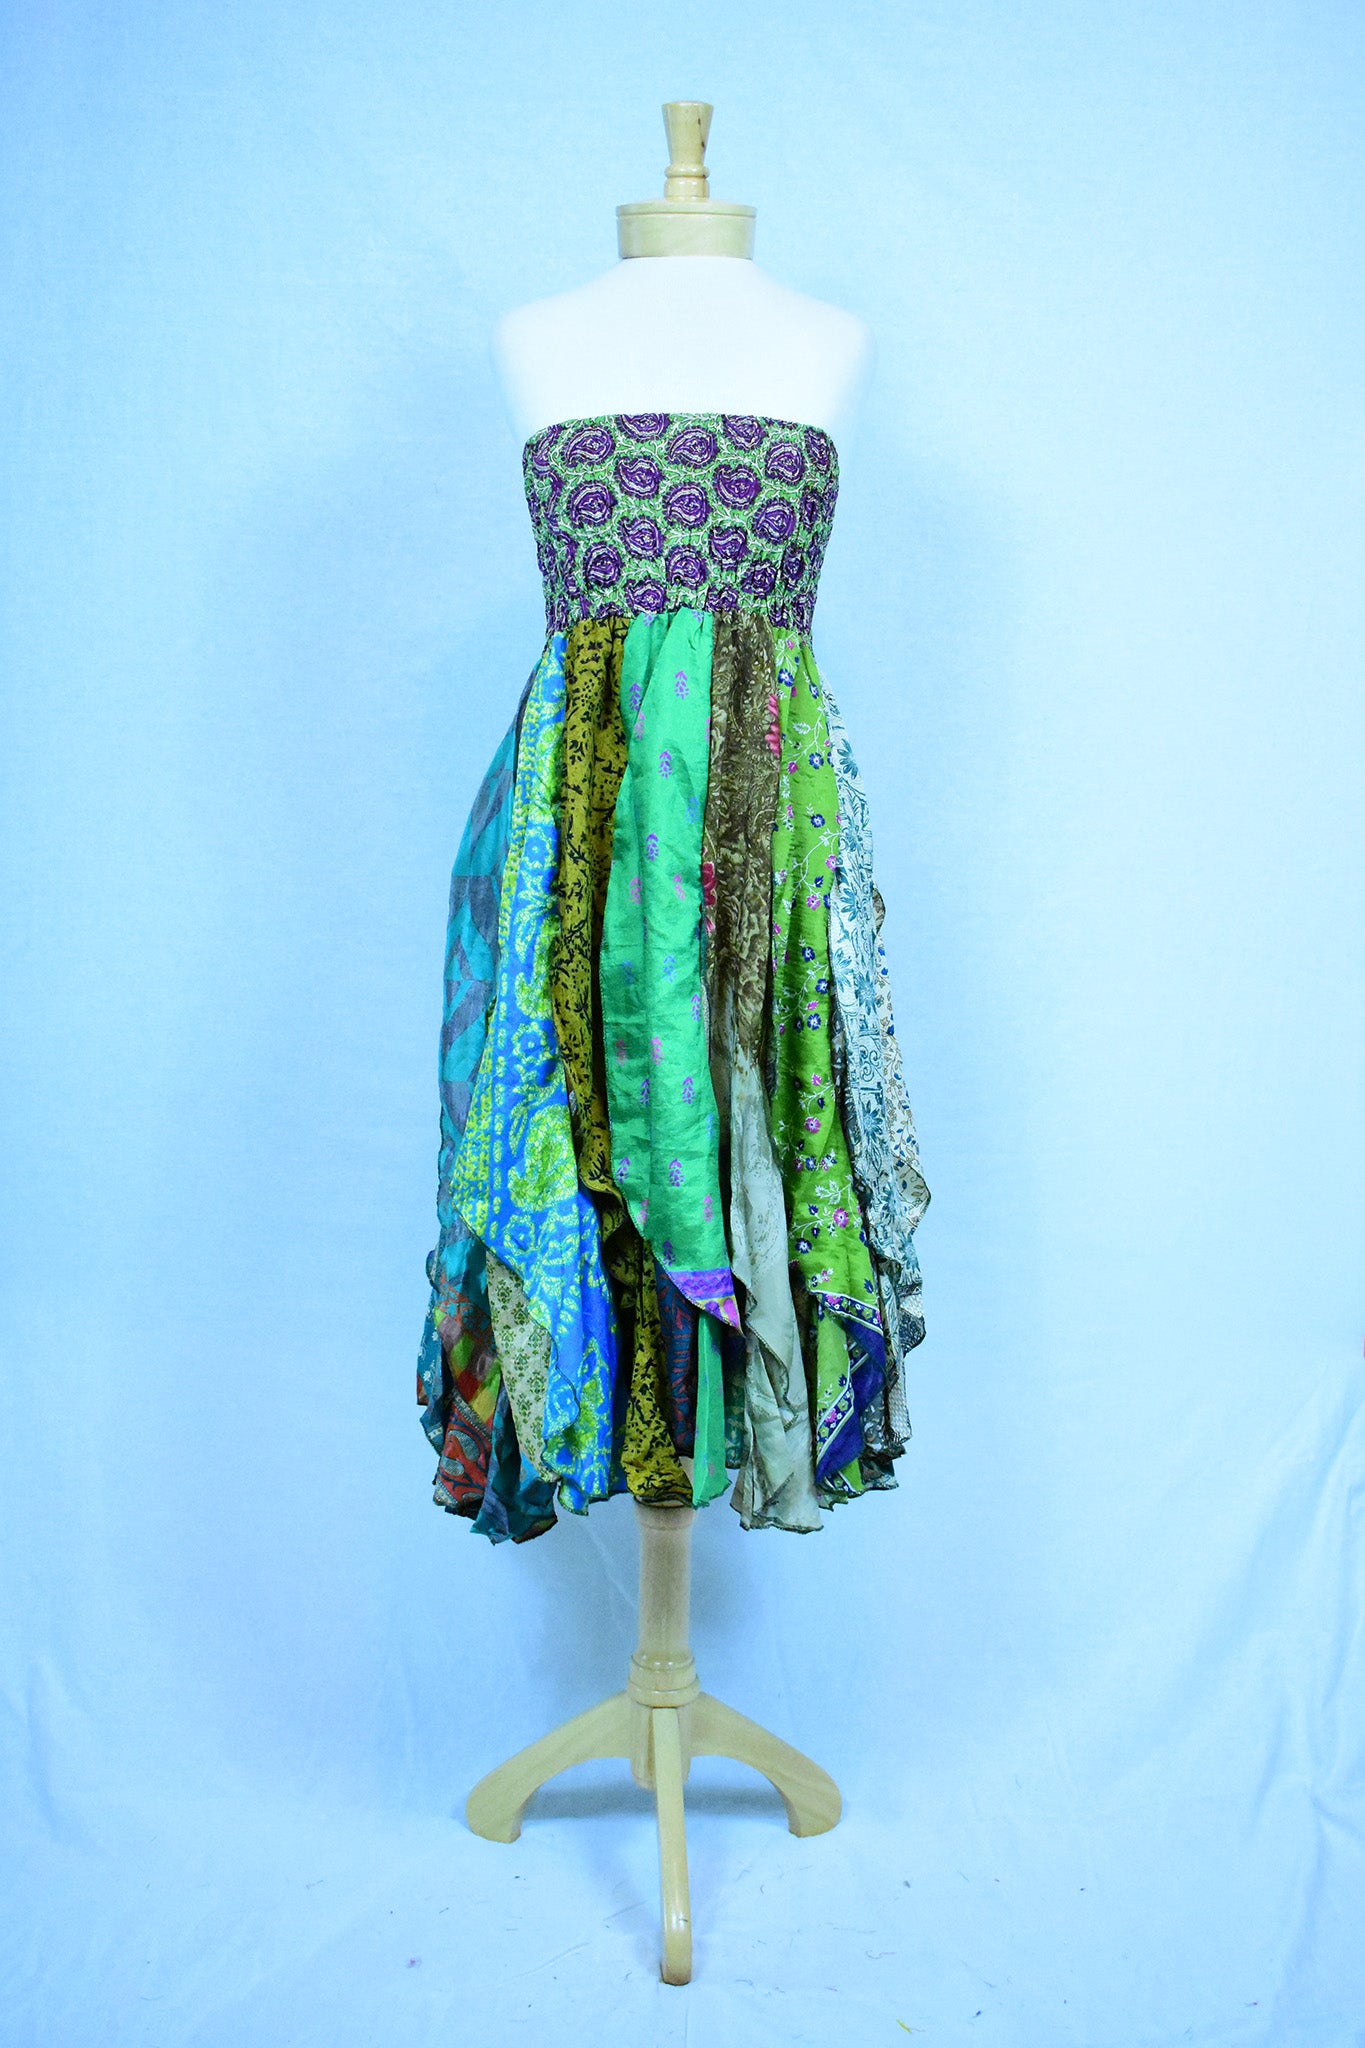 Fairy Dress Ruffle Skirt 9 Front View